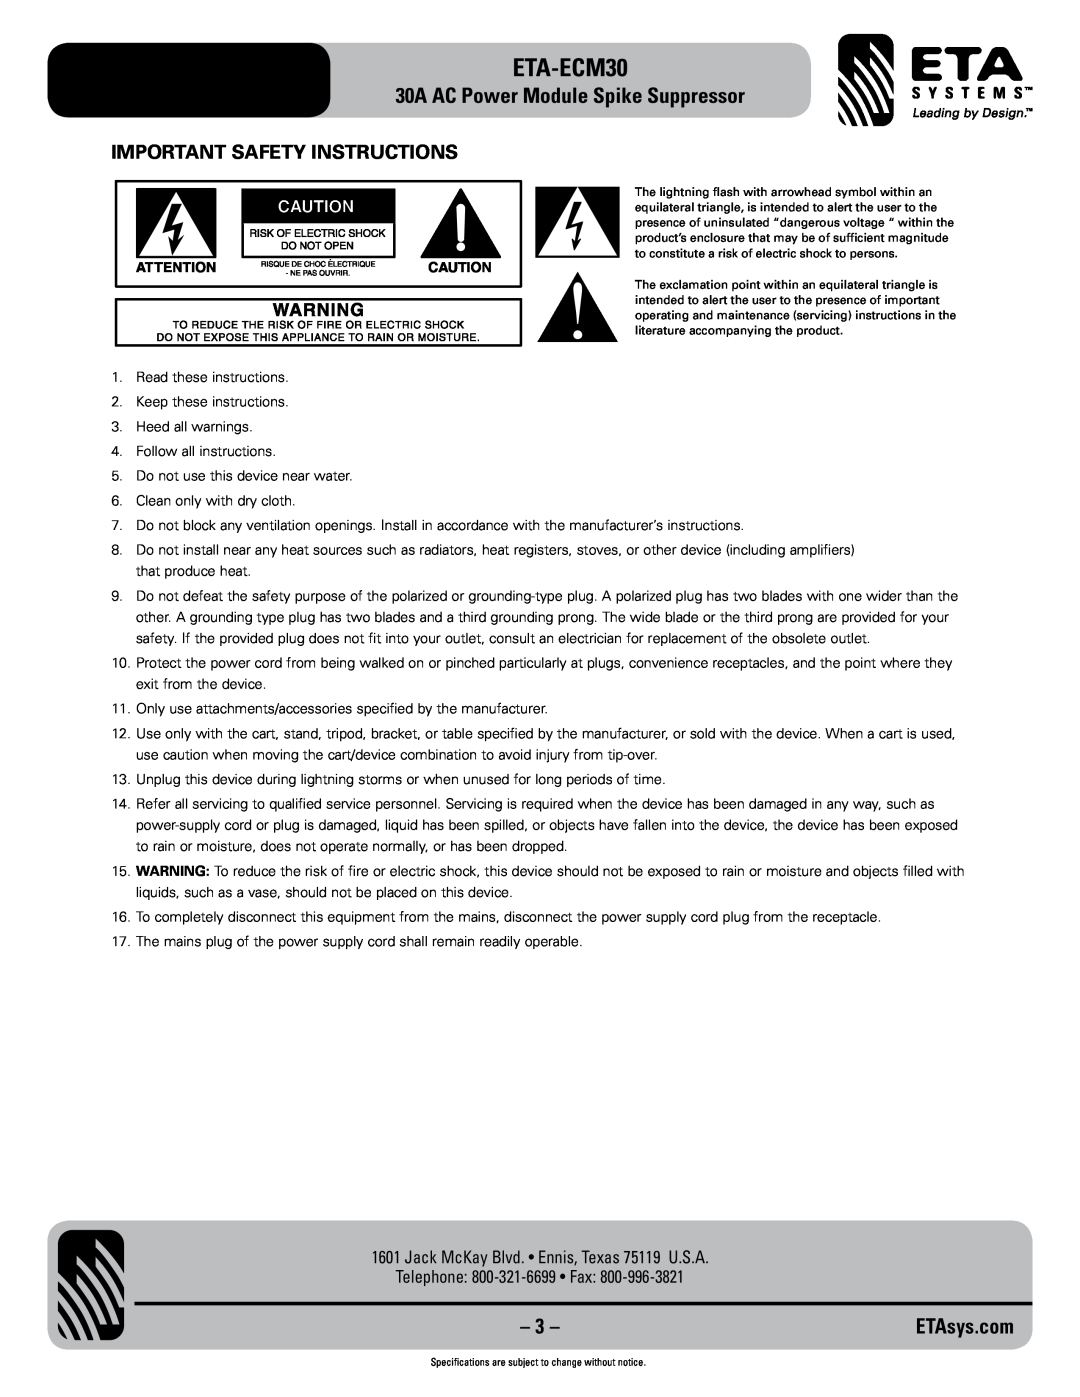 ETA Systems ETA-ECM30 Important Safety Instructions, 30A AC Power Module Spike Suppressor, Telephone 800-321-6699 Fax 